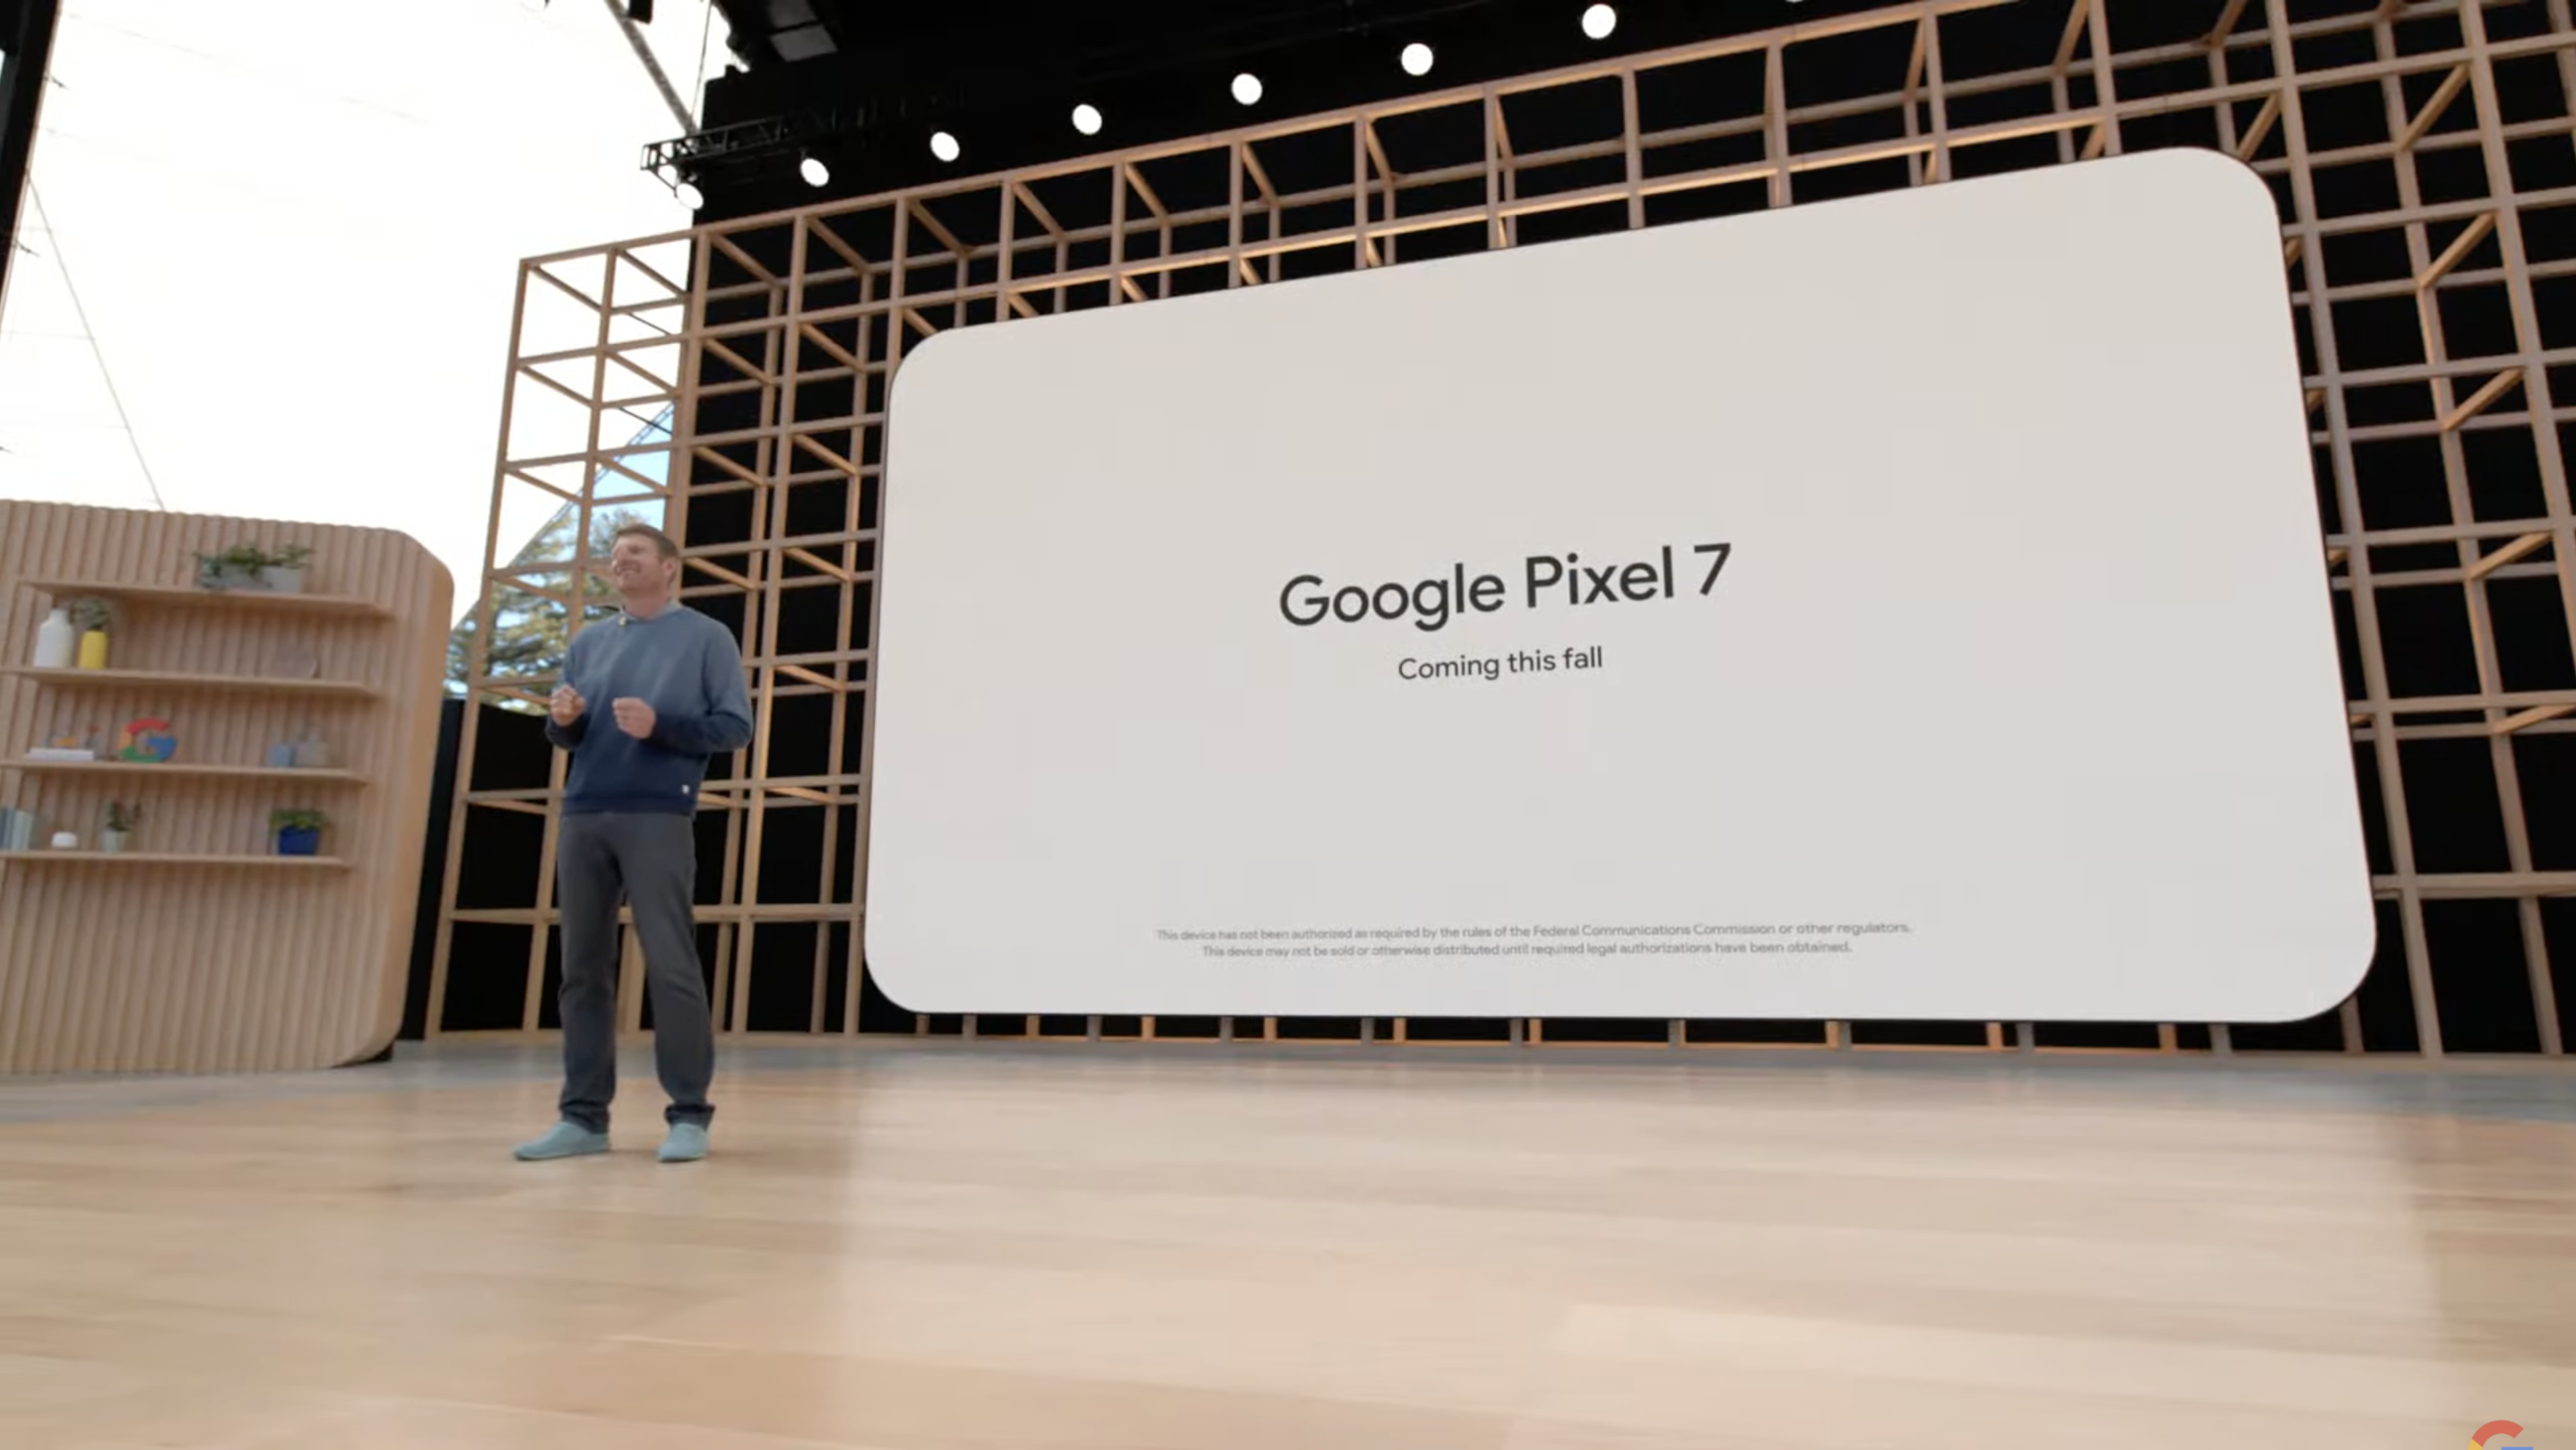 Google Pixel 7 reveal at Google IO 2022